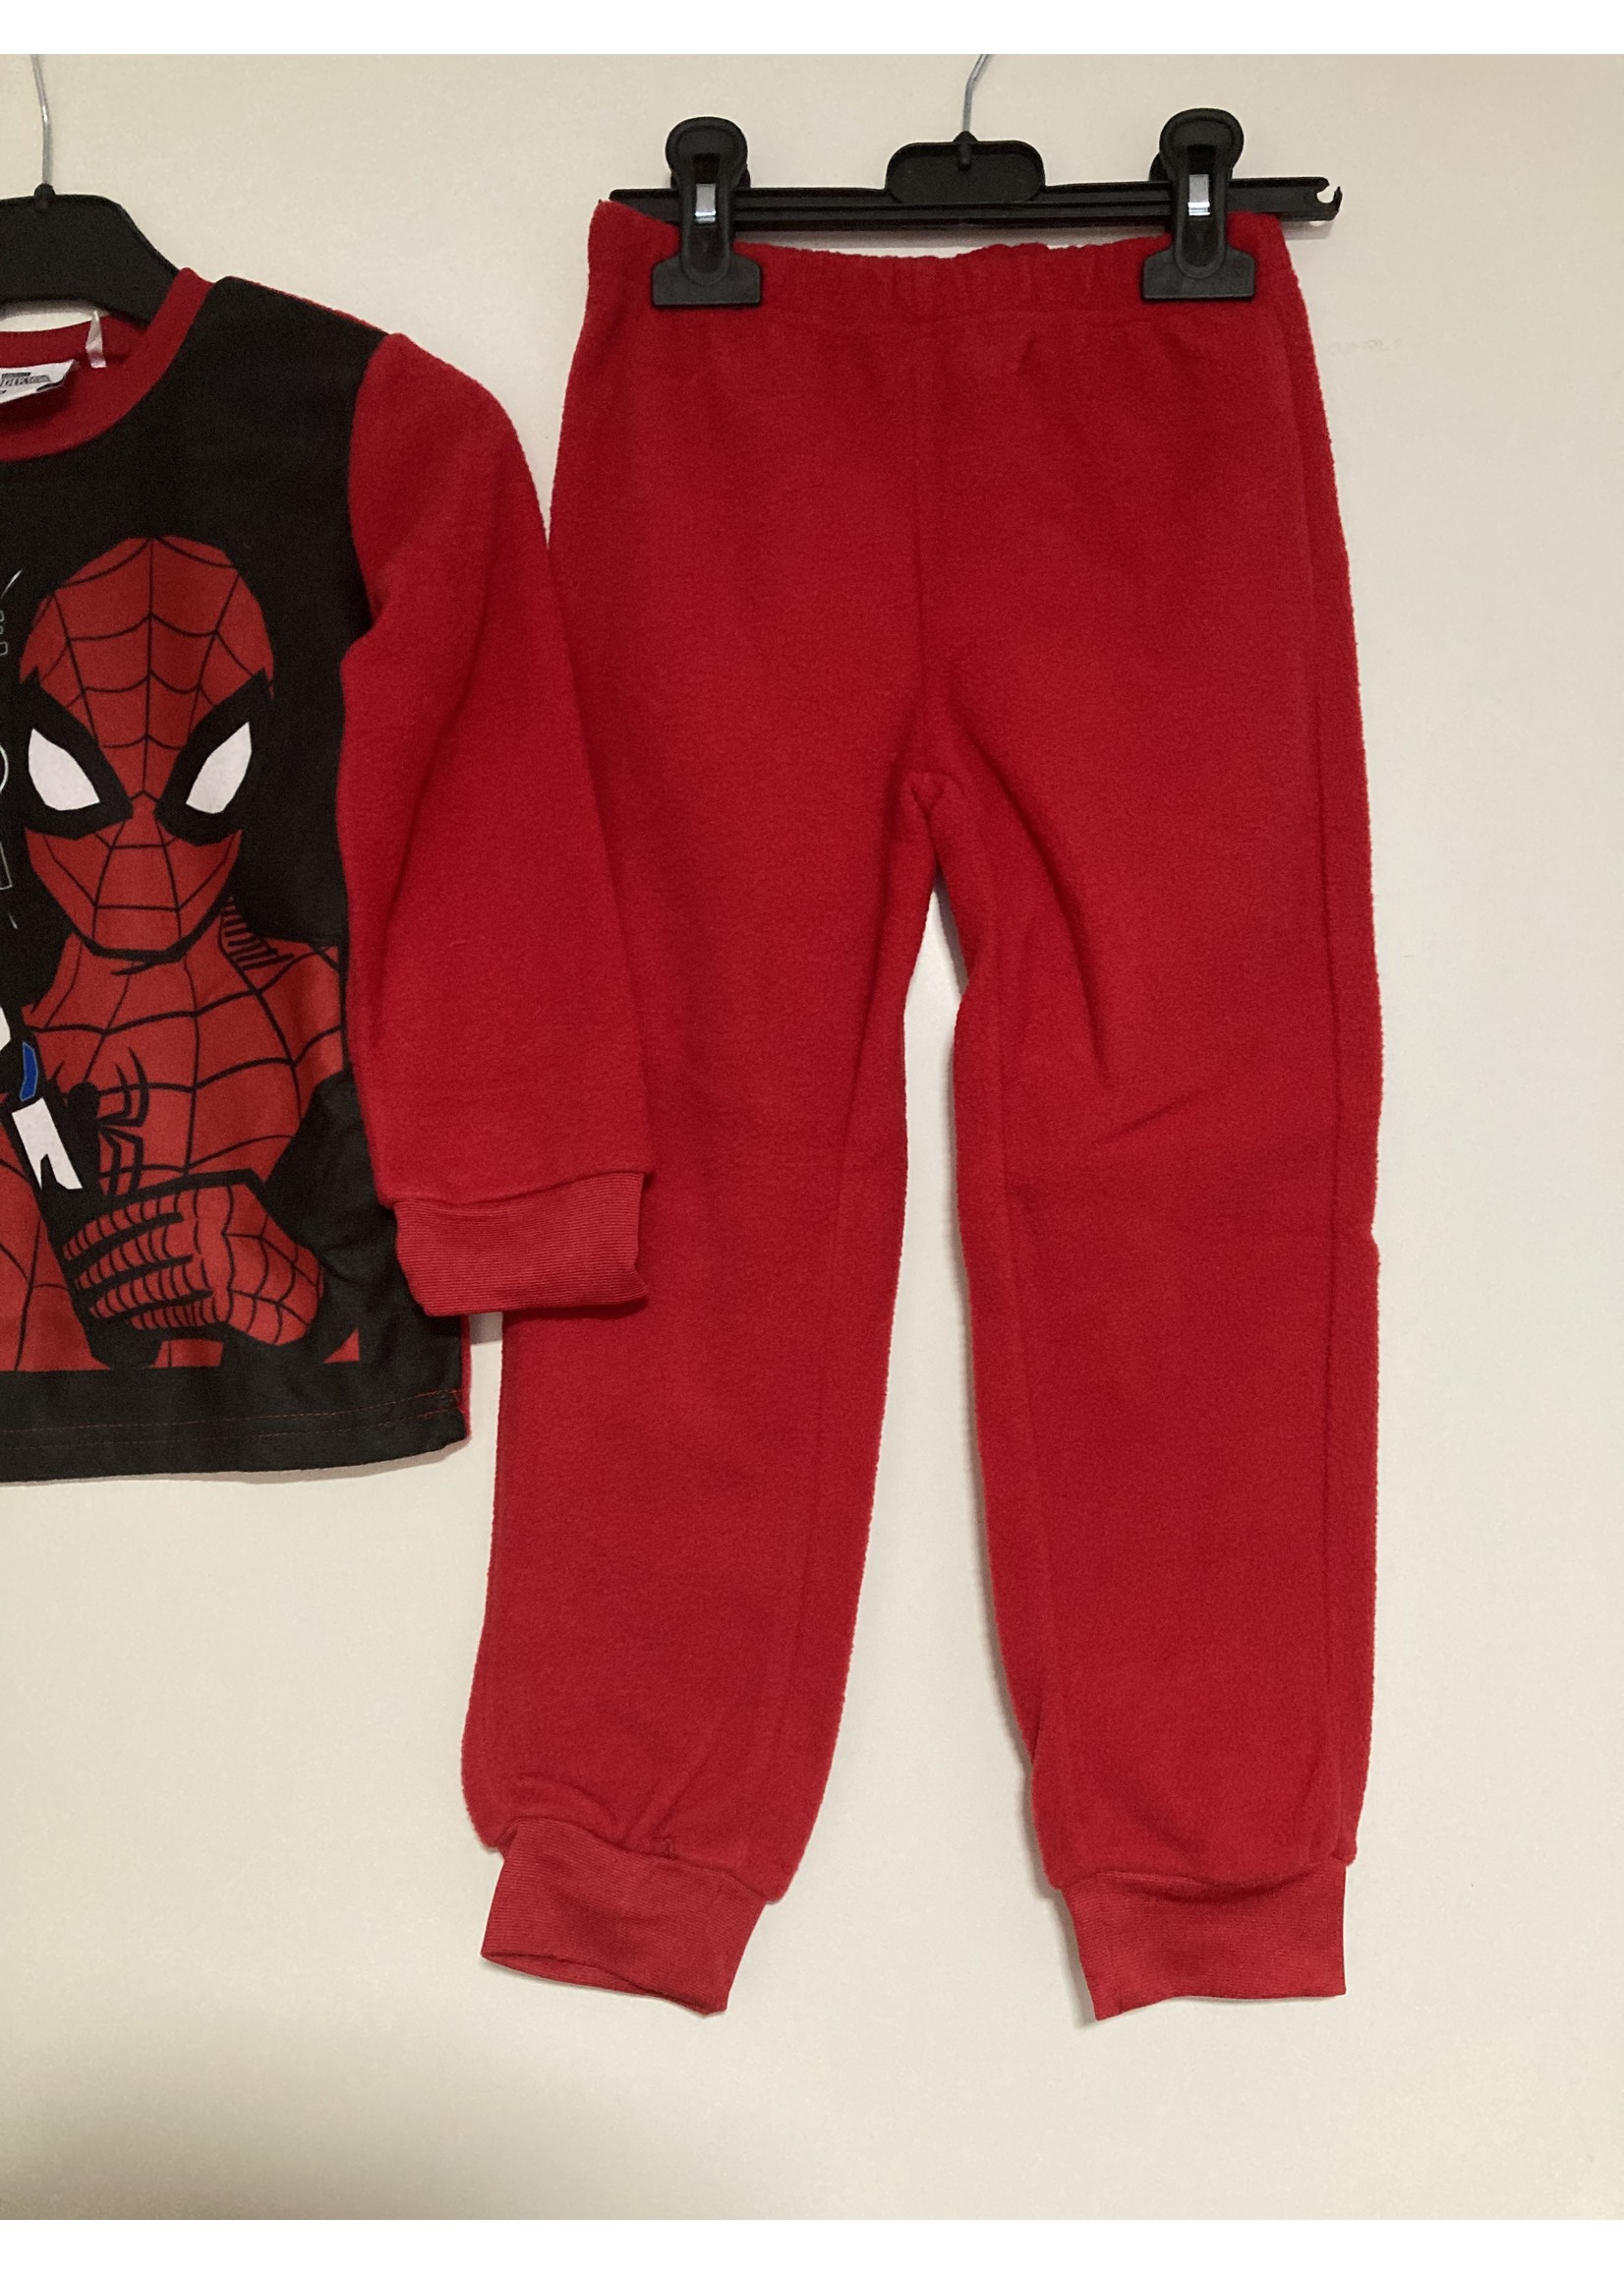 Marvel Spiderman Pajamas from Marvel red